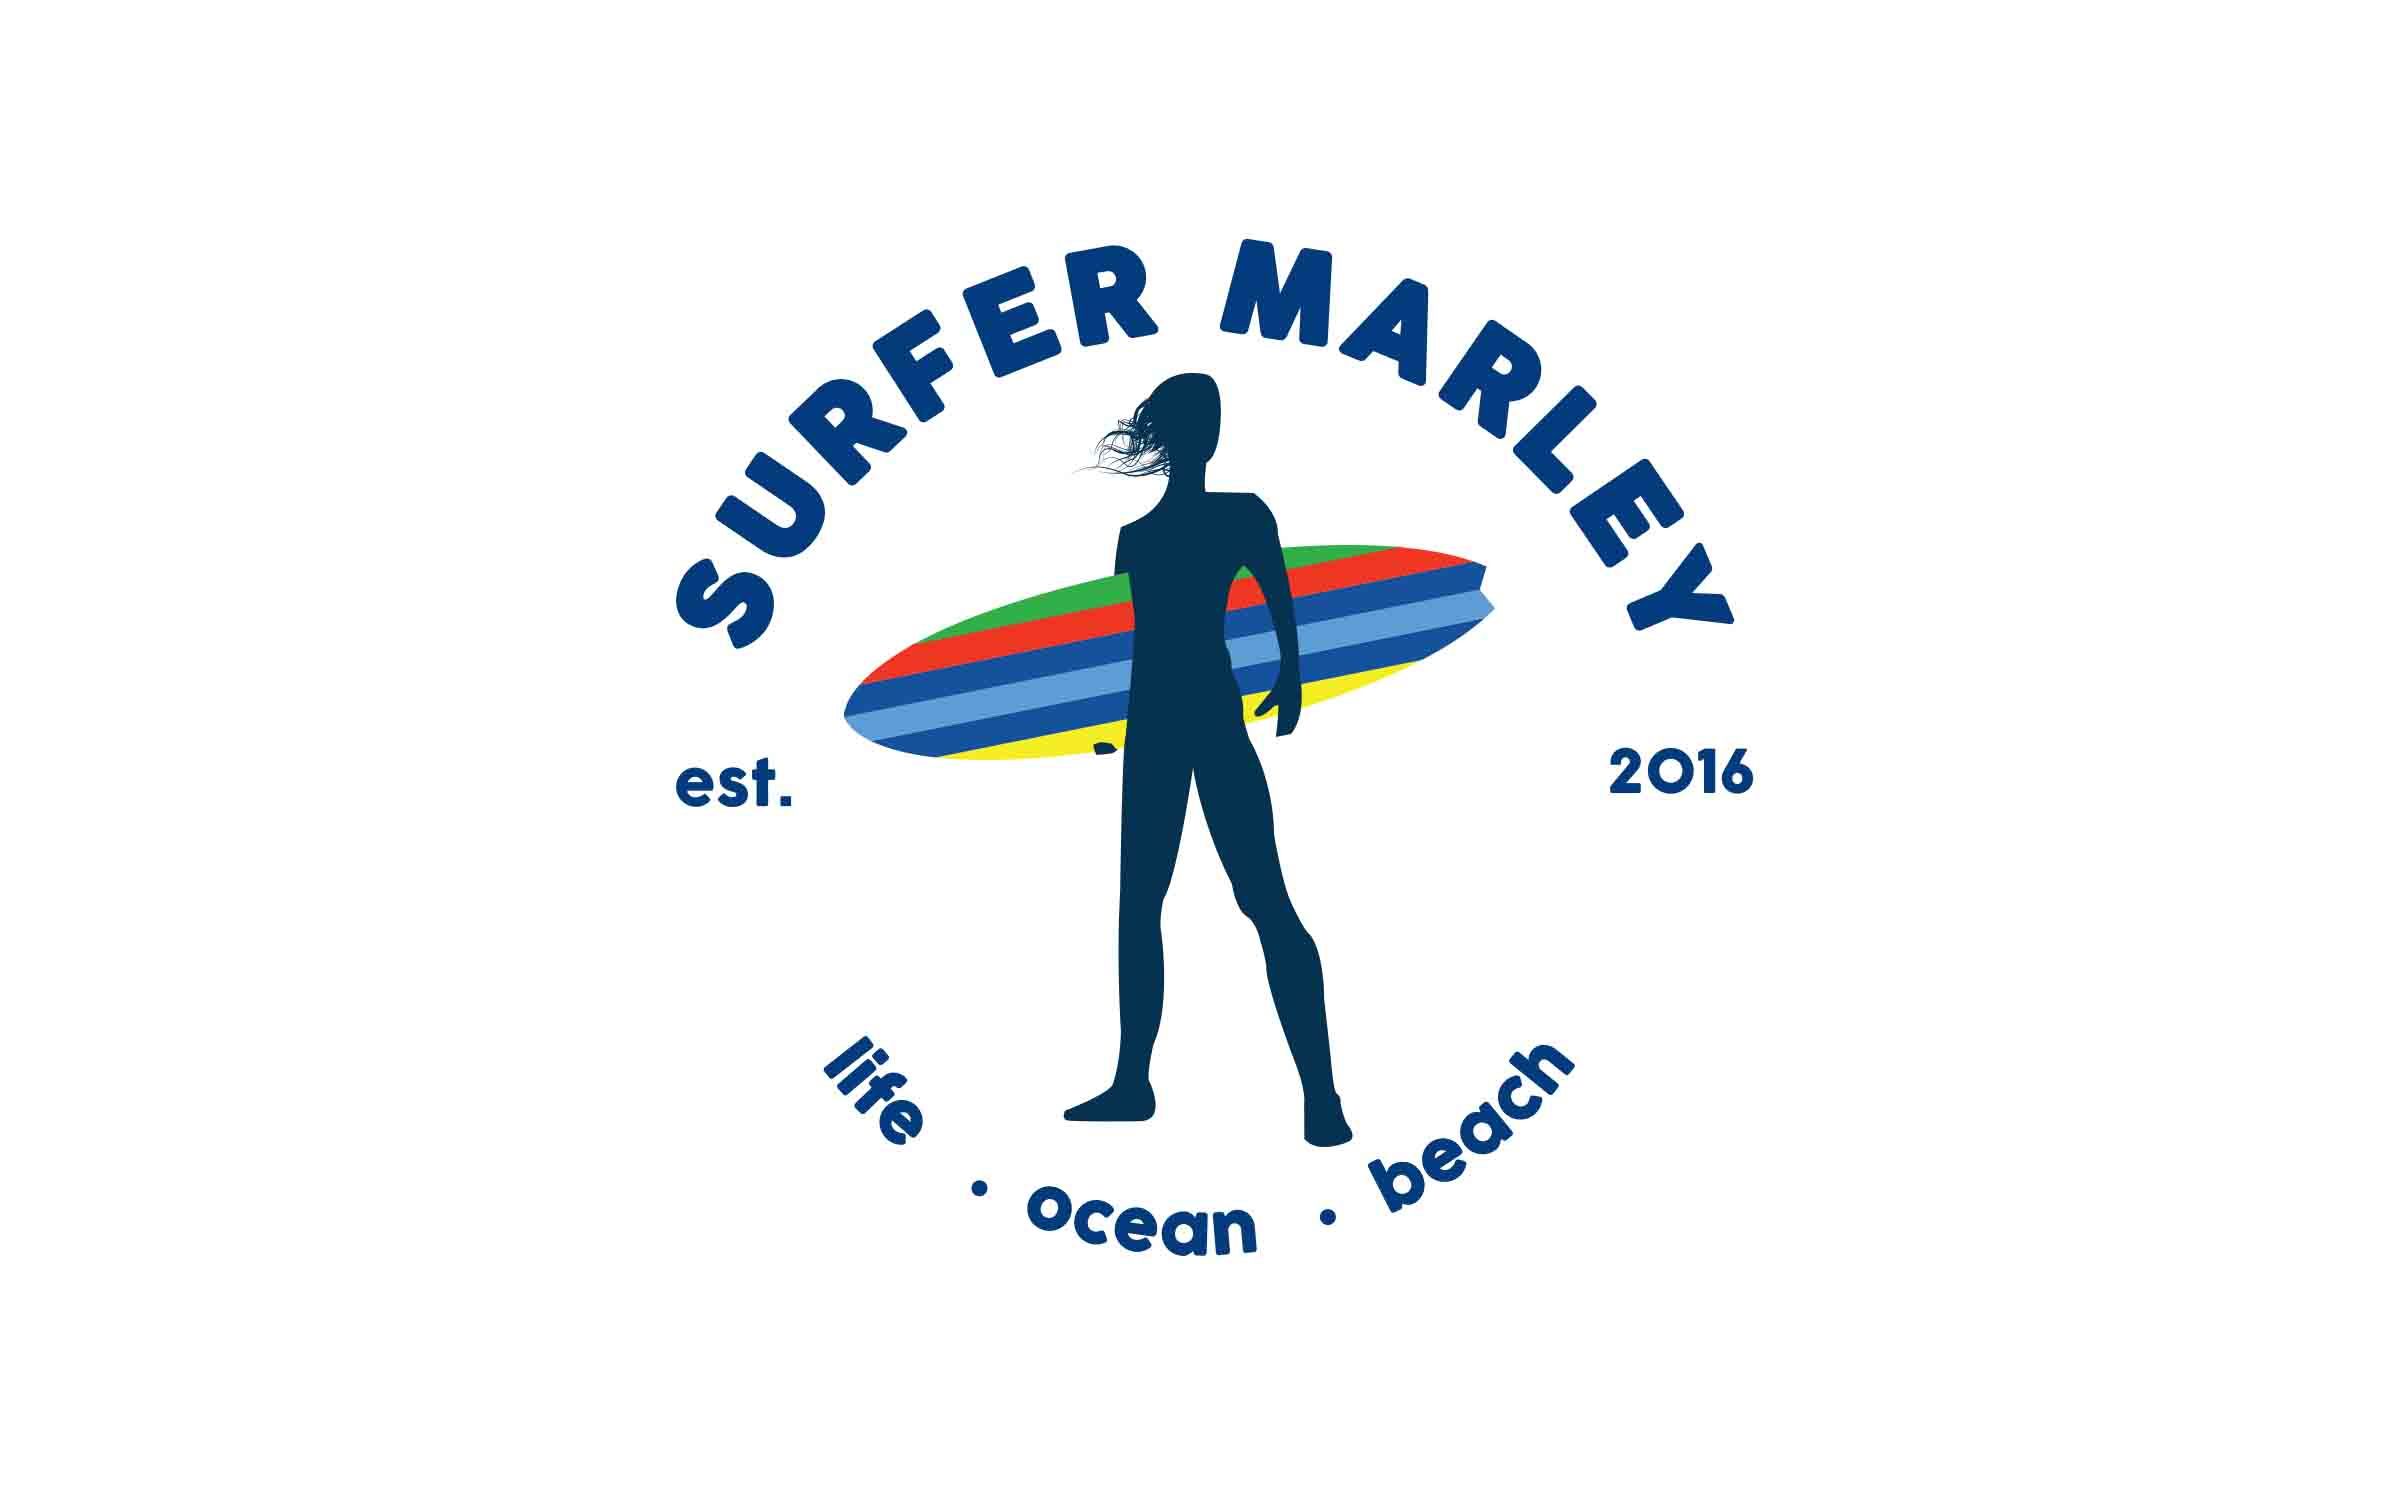 surfer marley.jpg